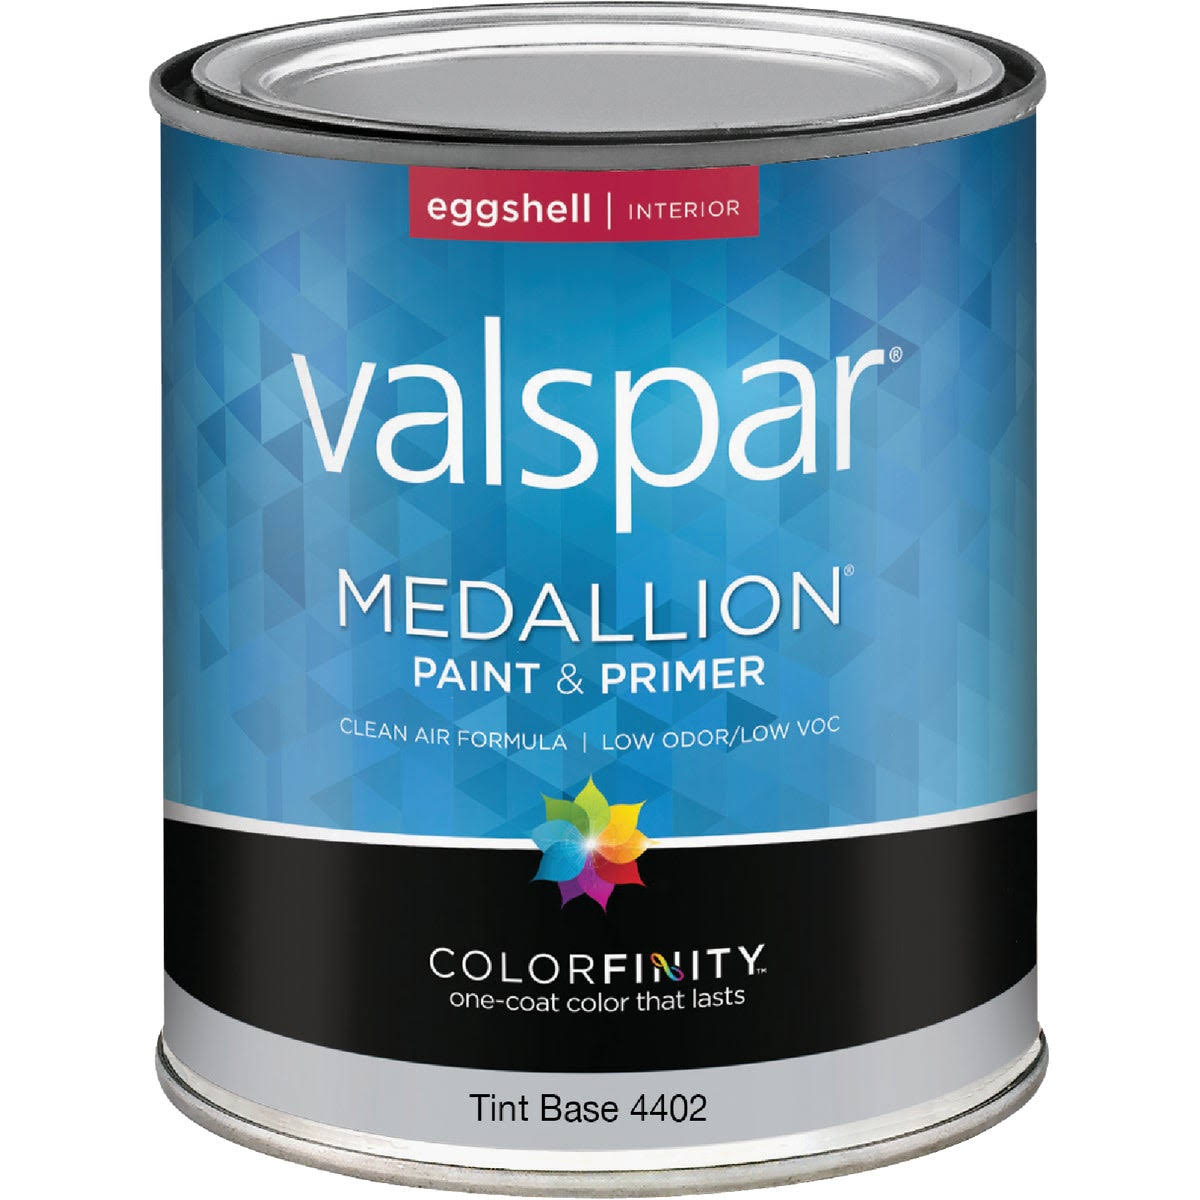 Valspar Tint Base Medallion Interior Acrylic Paint - Eggshell, 1 Quart